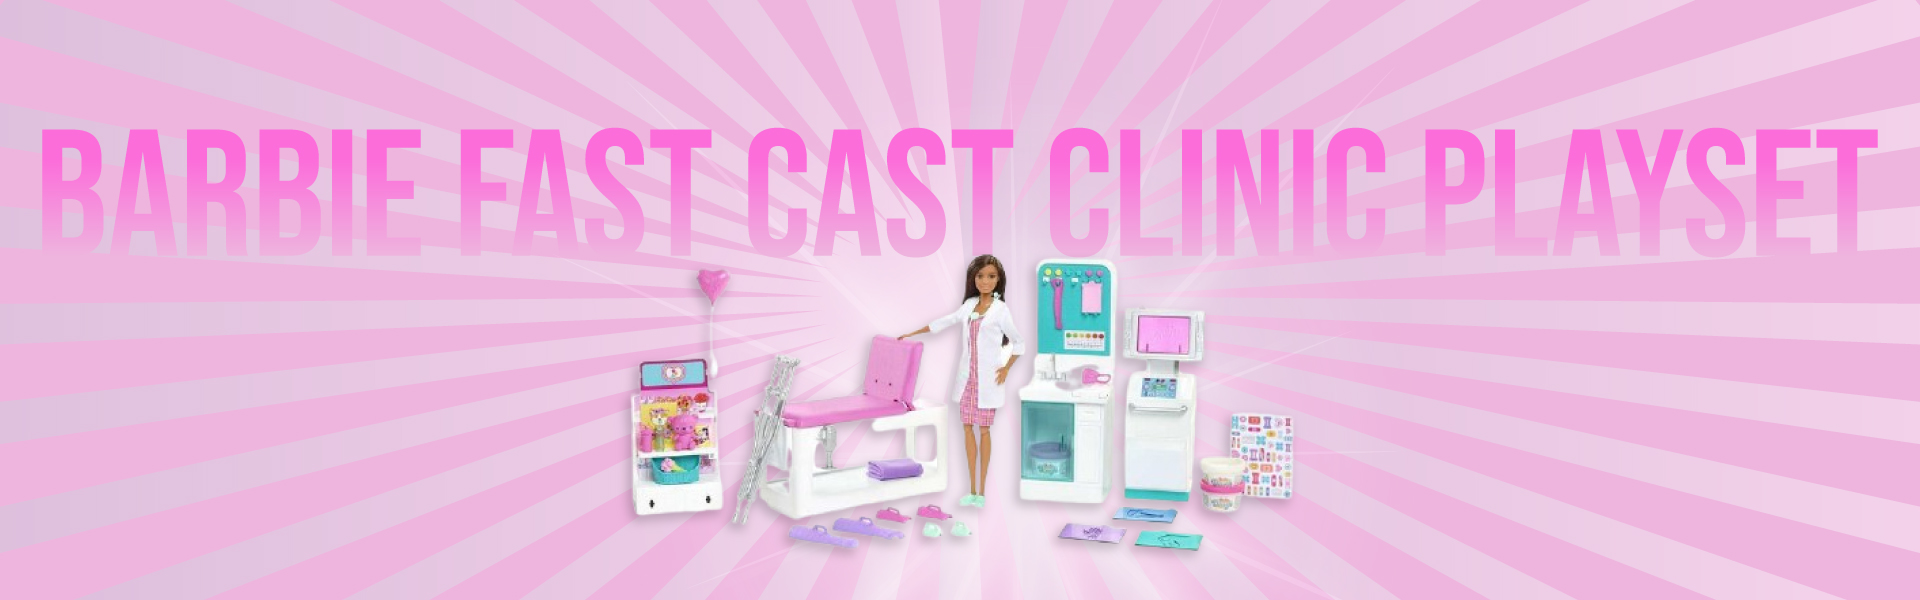 Barbie in treating patients